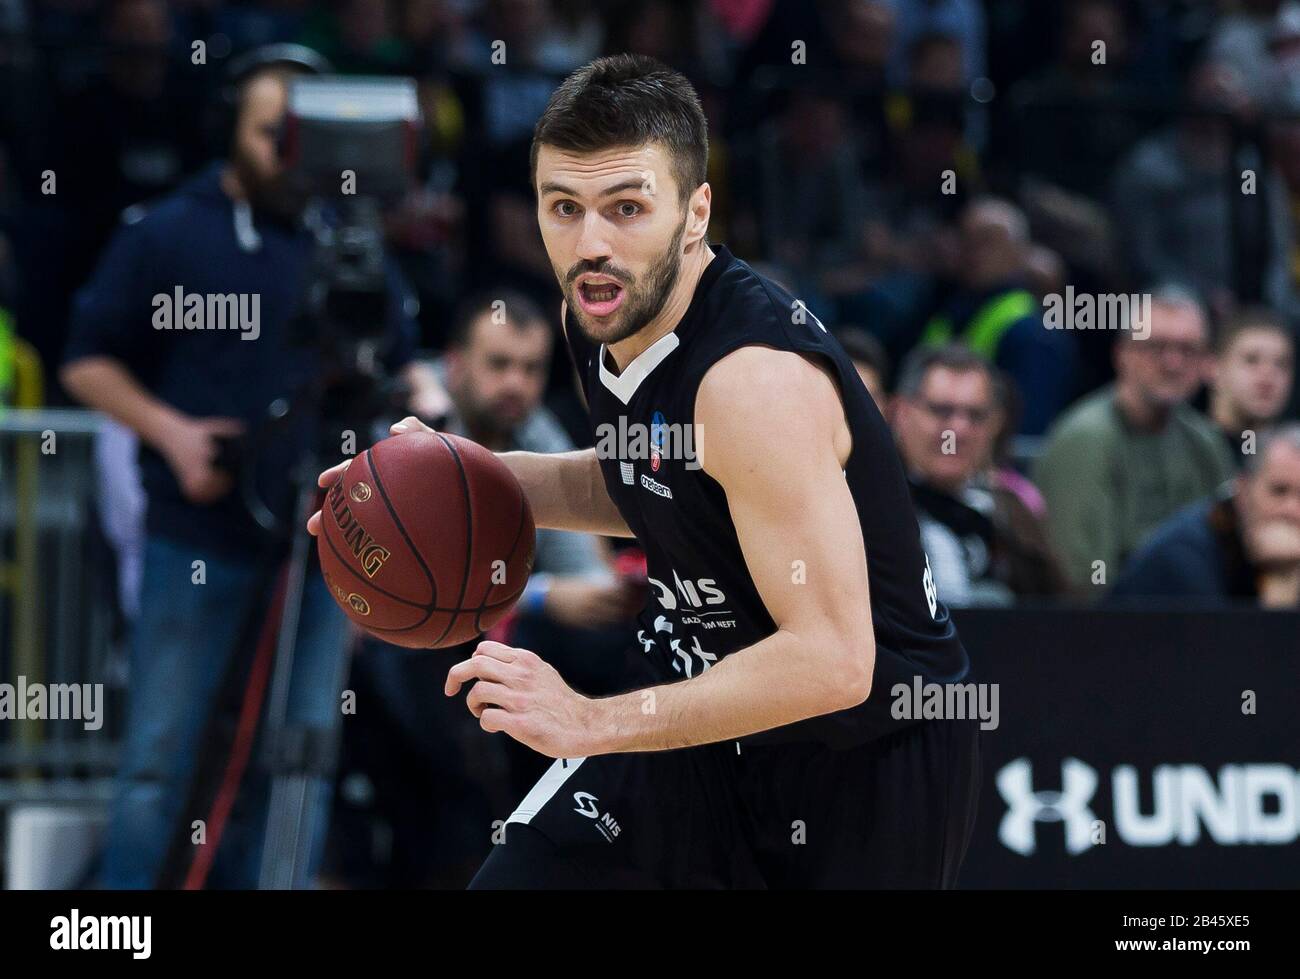 Belgrade, Serbia. 4th Mar, 2020. Nemanja Gordic of KK Partizan drives to the basket. Credit: Nikola Krstic/Alamy Live News Stock Photo